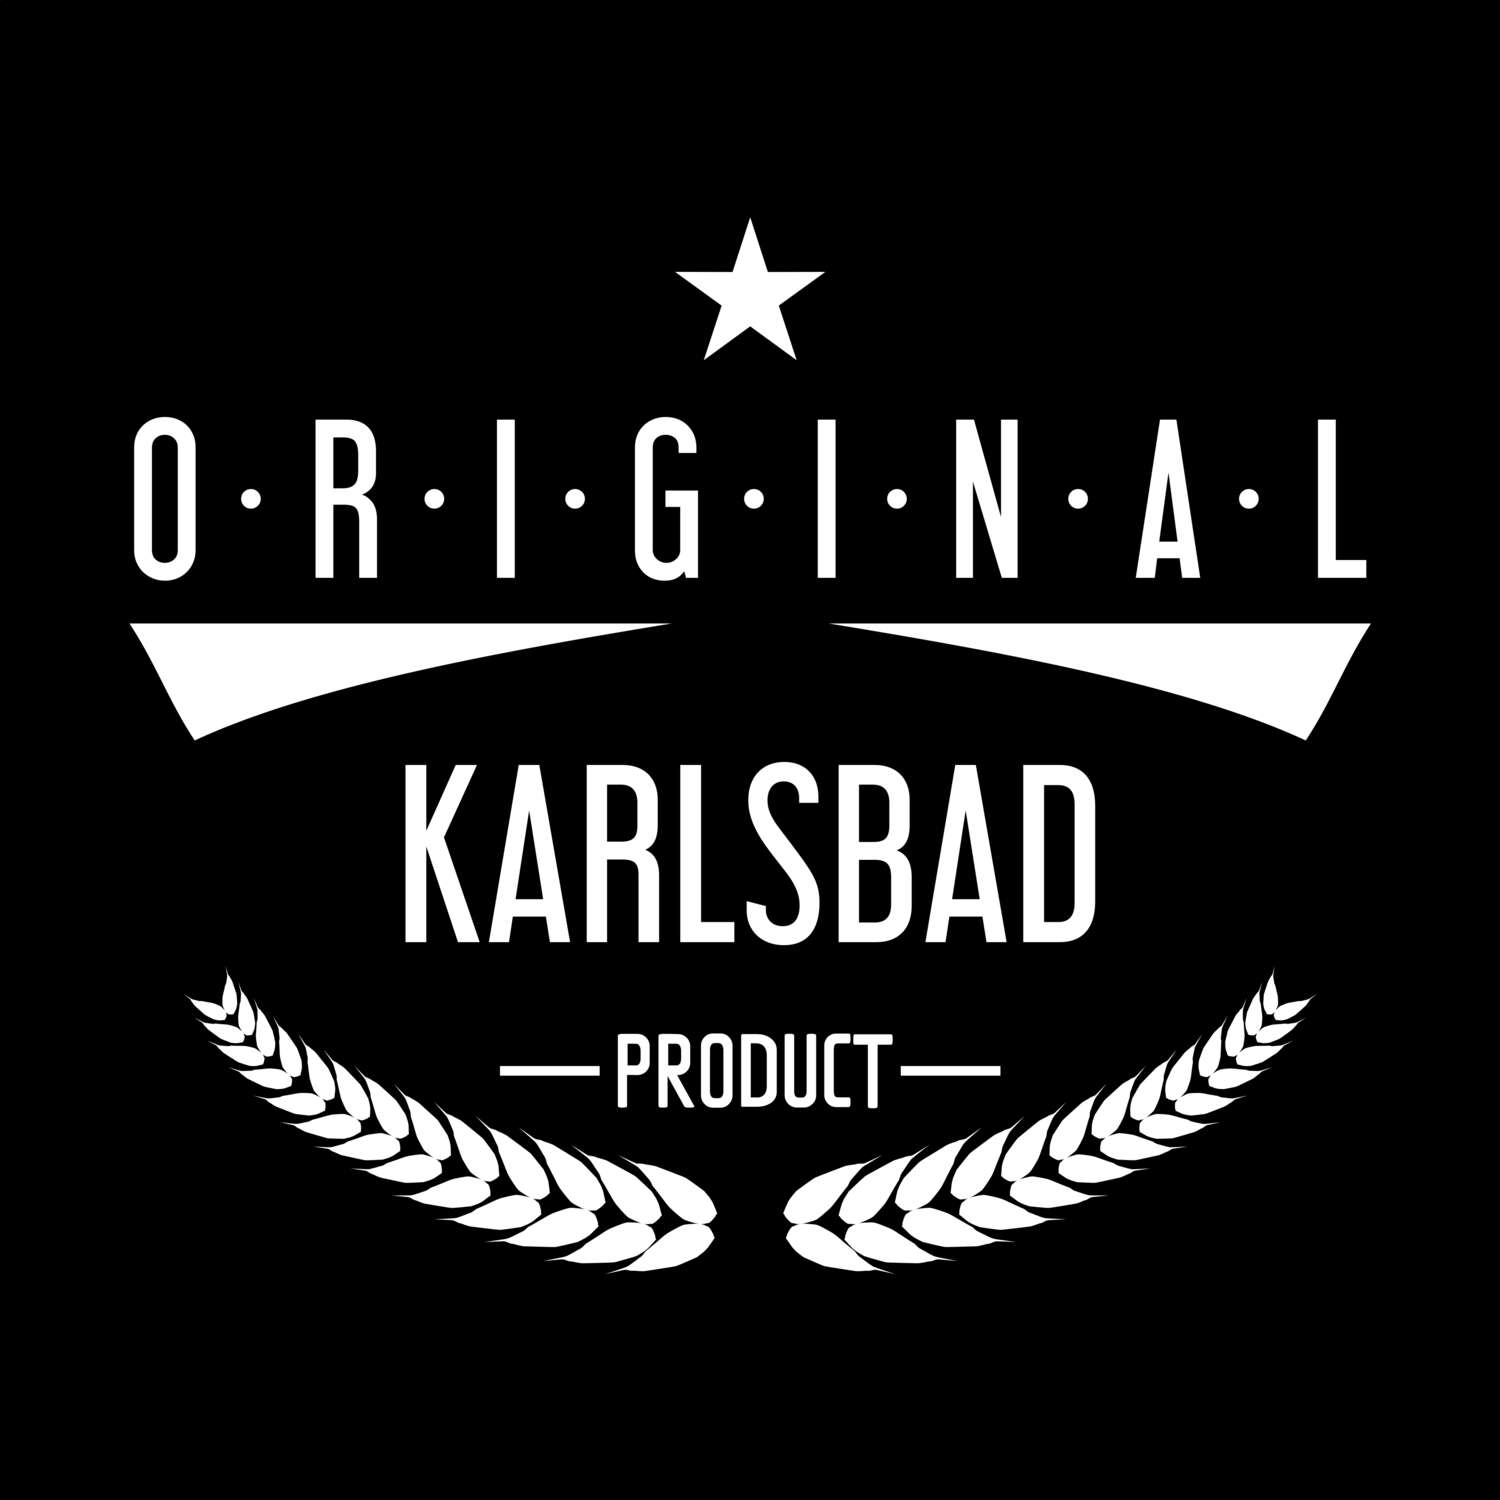 Karlsbad T-Shirt »Original Product«